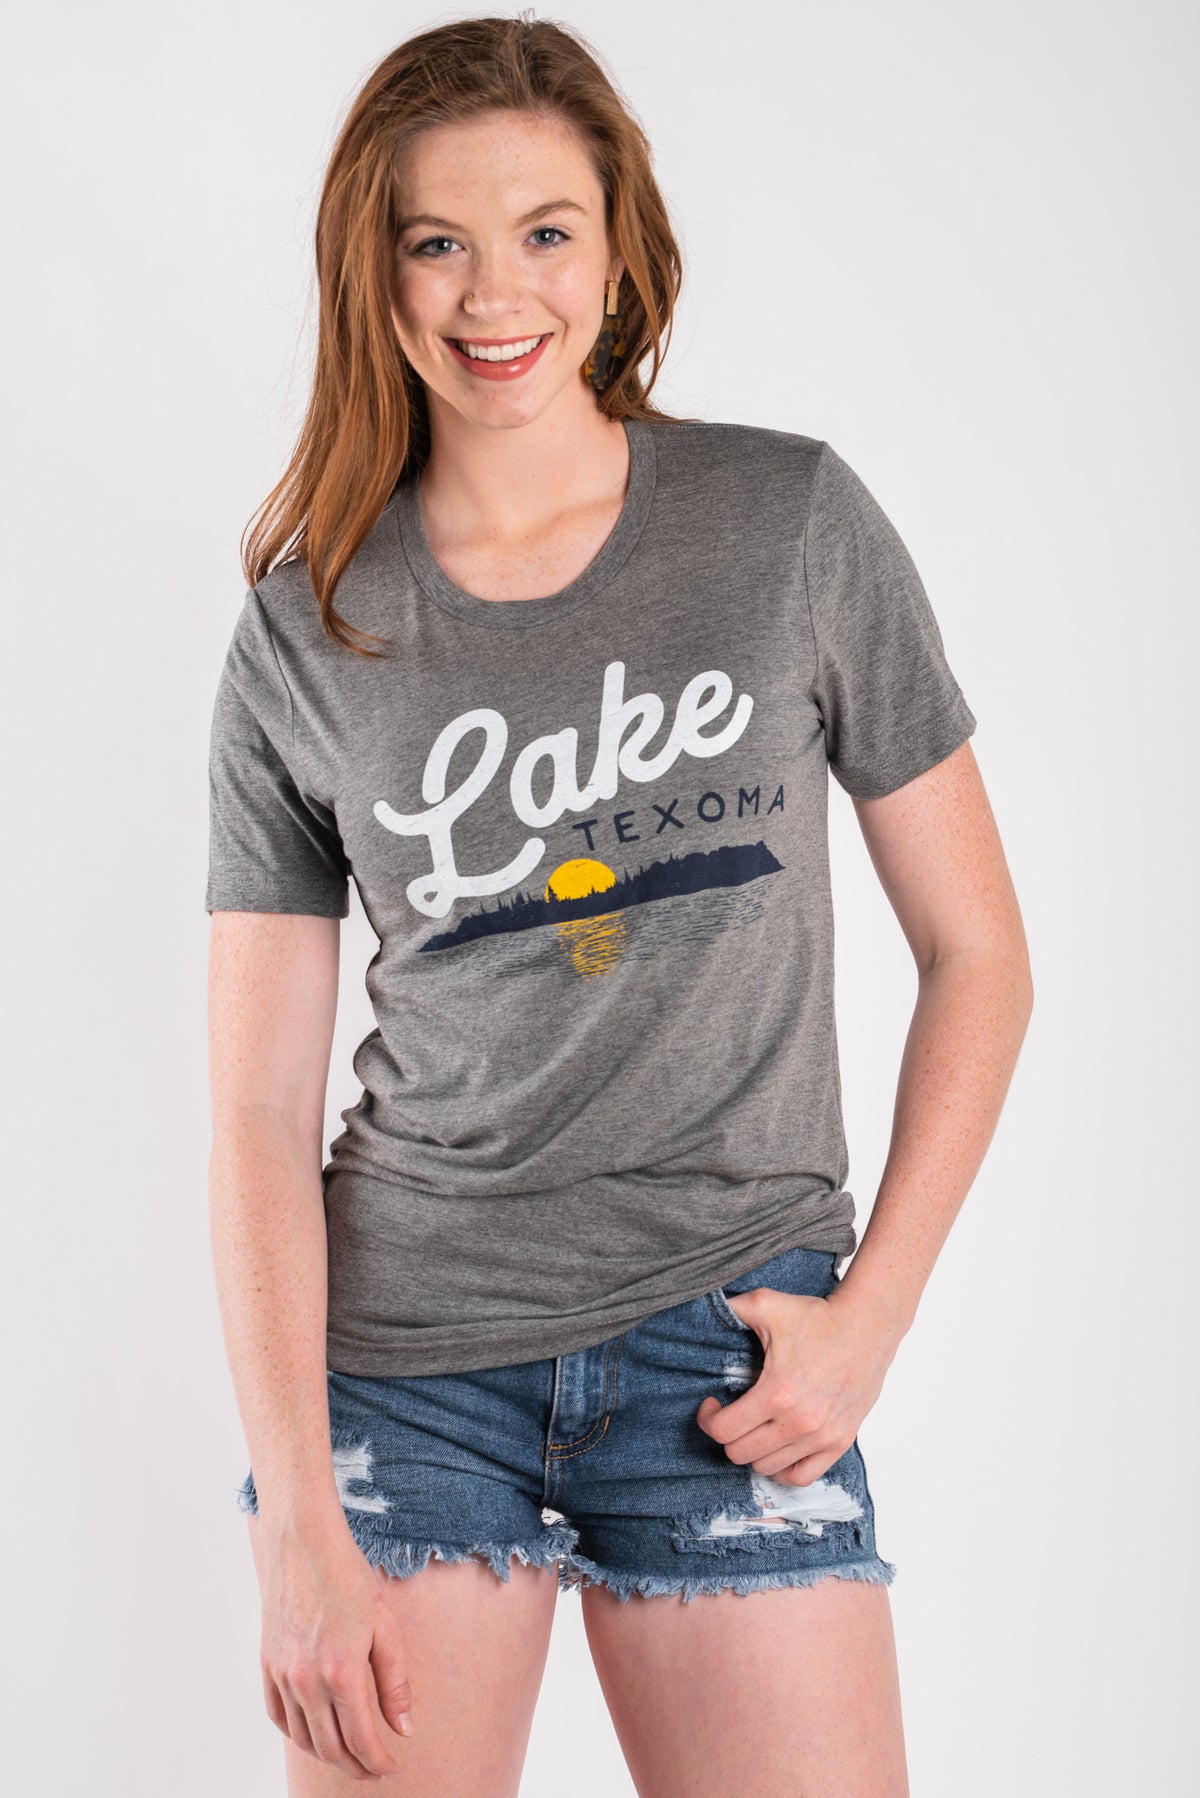 Lake Texoma unisex short sleeve t-shirt grey - DayDreamer Graphic Band Tees at Lush Fashion Lounge Trendy Boutique in Oklahoma City